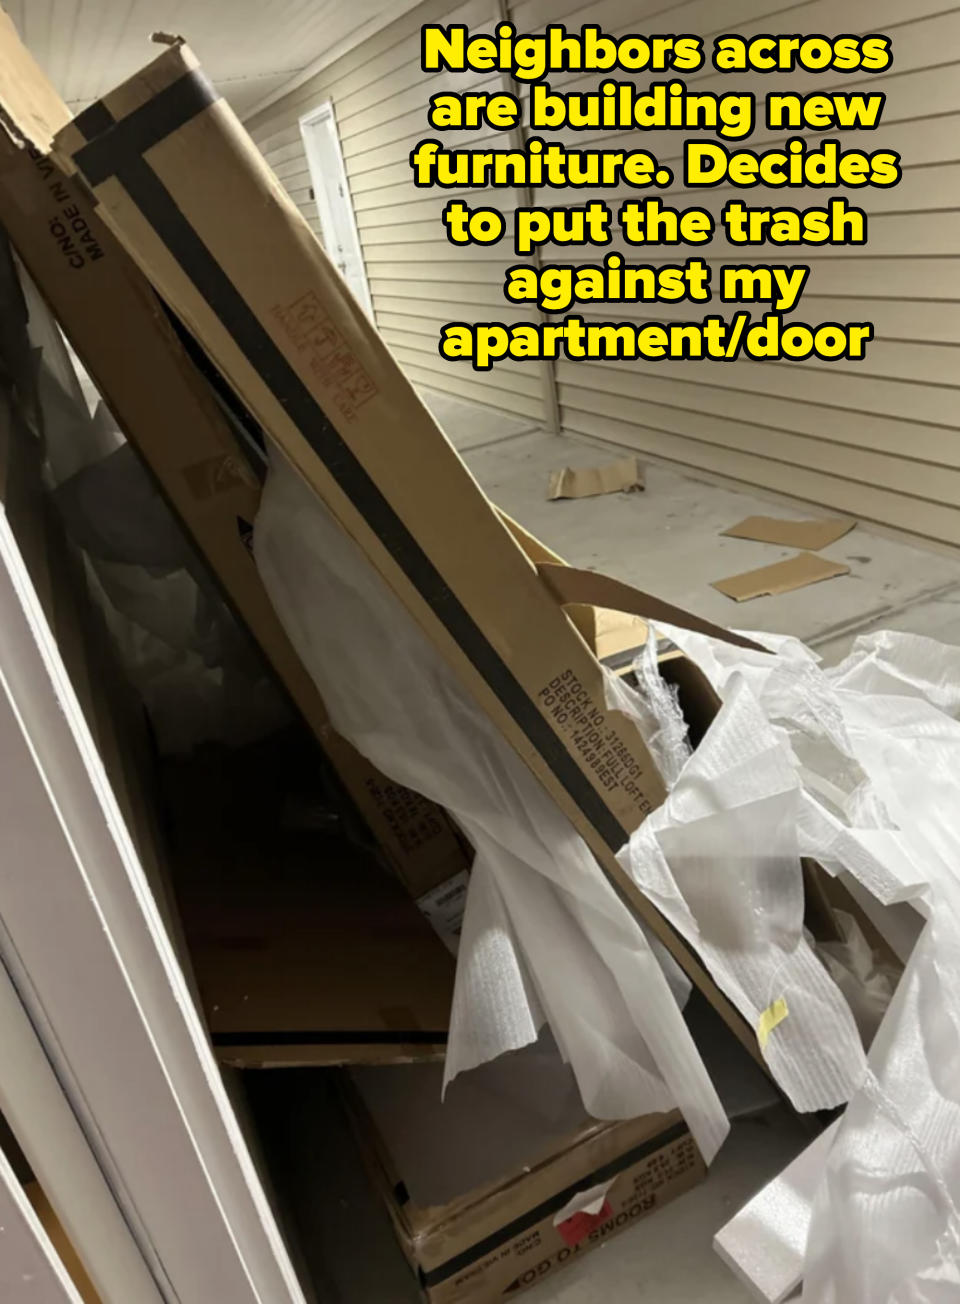 trash next to someone's door